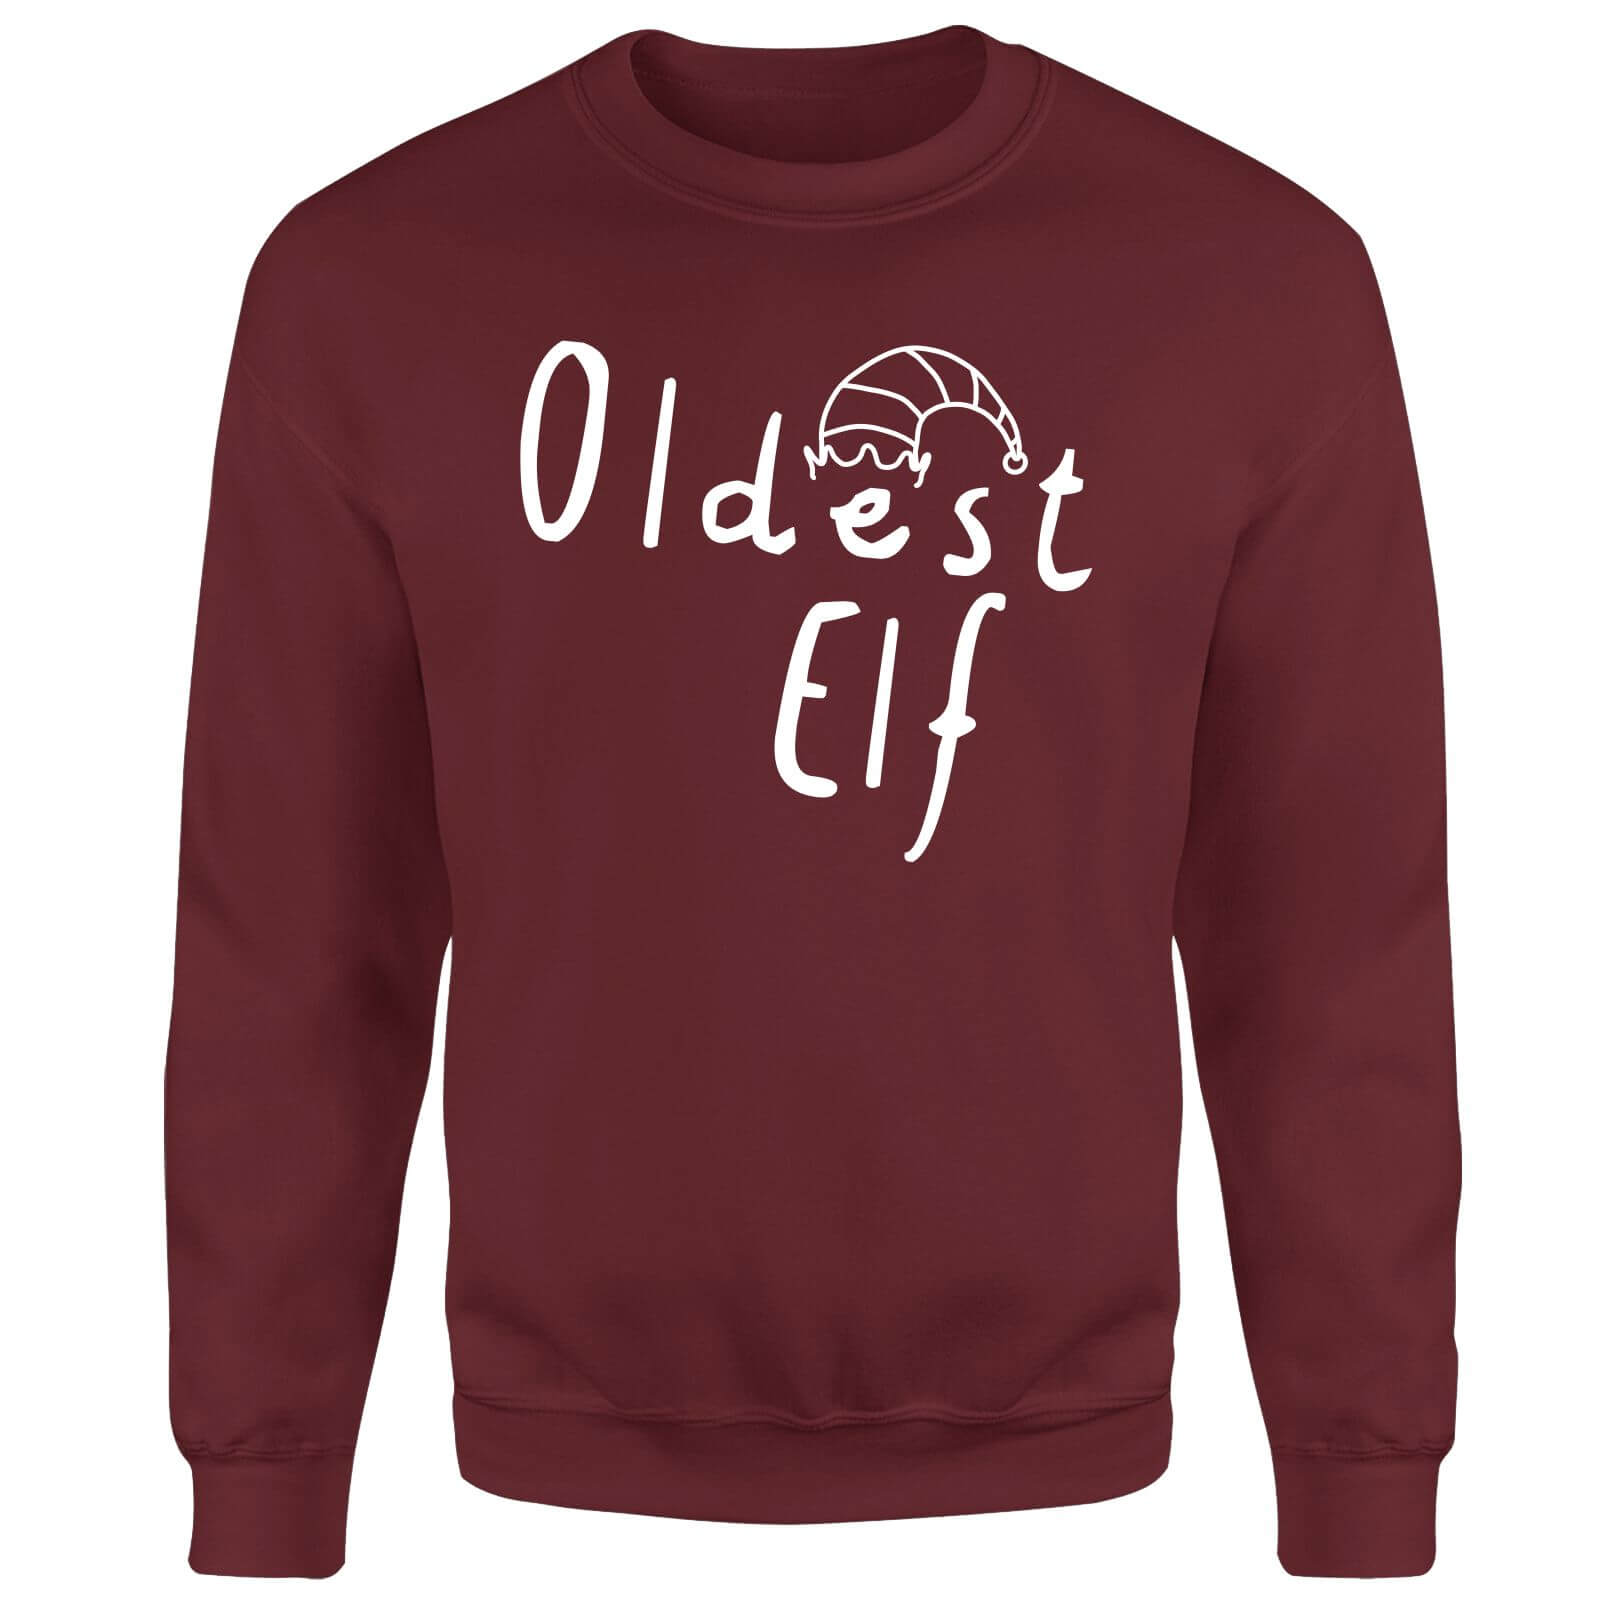 Oldest Elf Unisex Sweatshirt - Burgundy - S - Burgundy